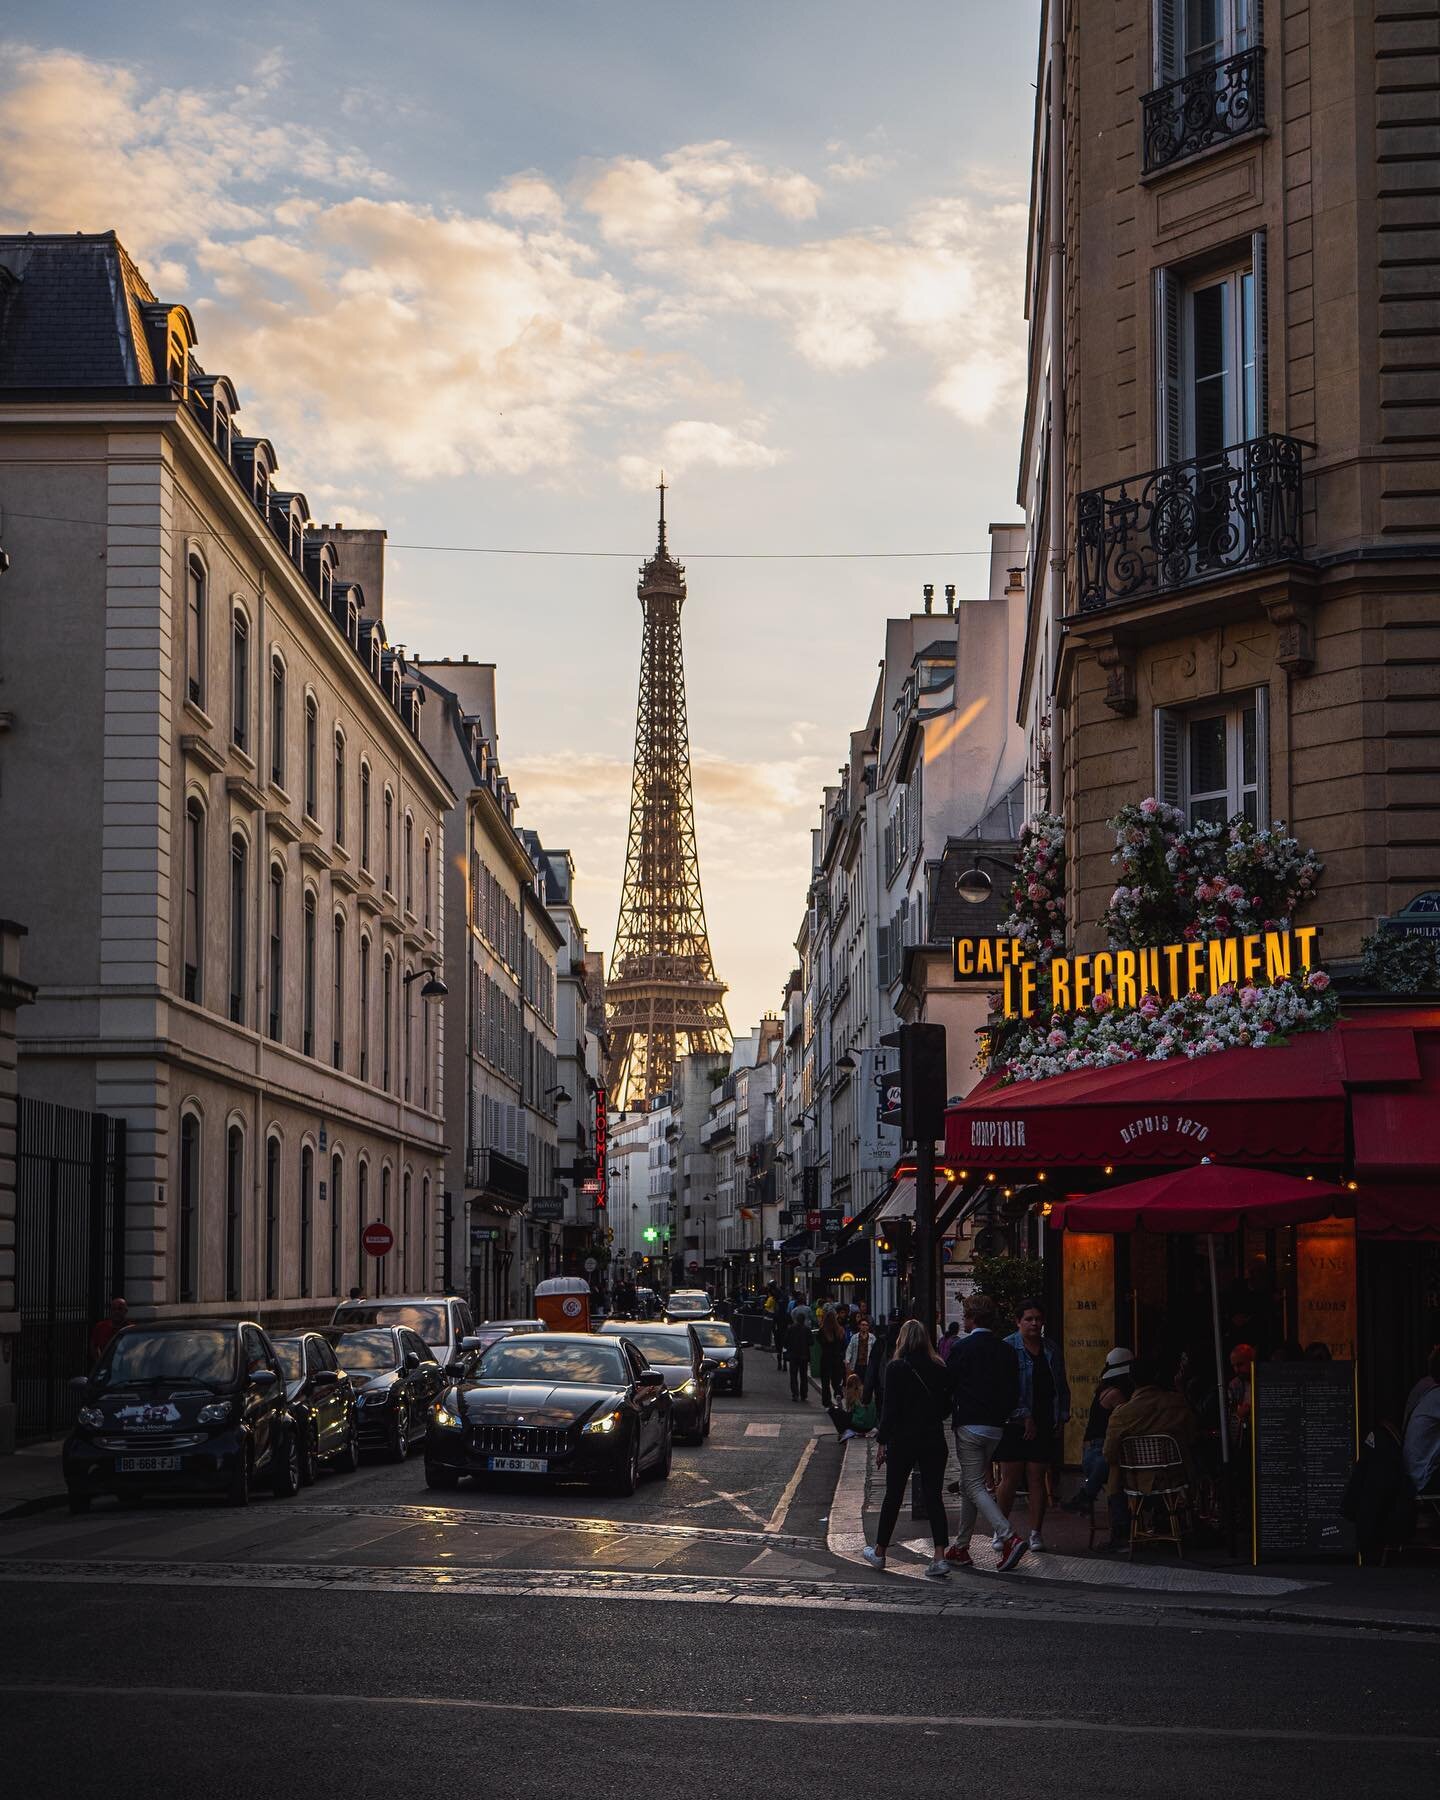 Bonsoir Paris 🥖🇫🇷
Wie krijgt er nu geen zin in ratatouille? 

#paris #parisfrance #eiffeltower #canonnederland